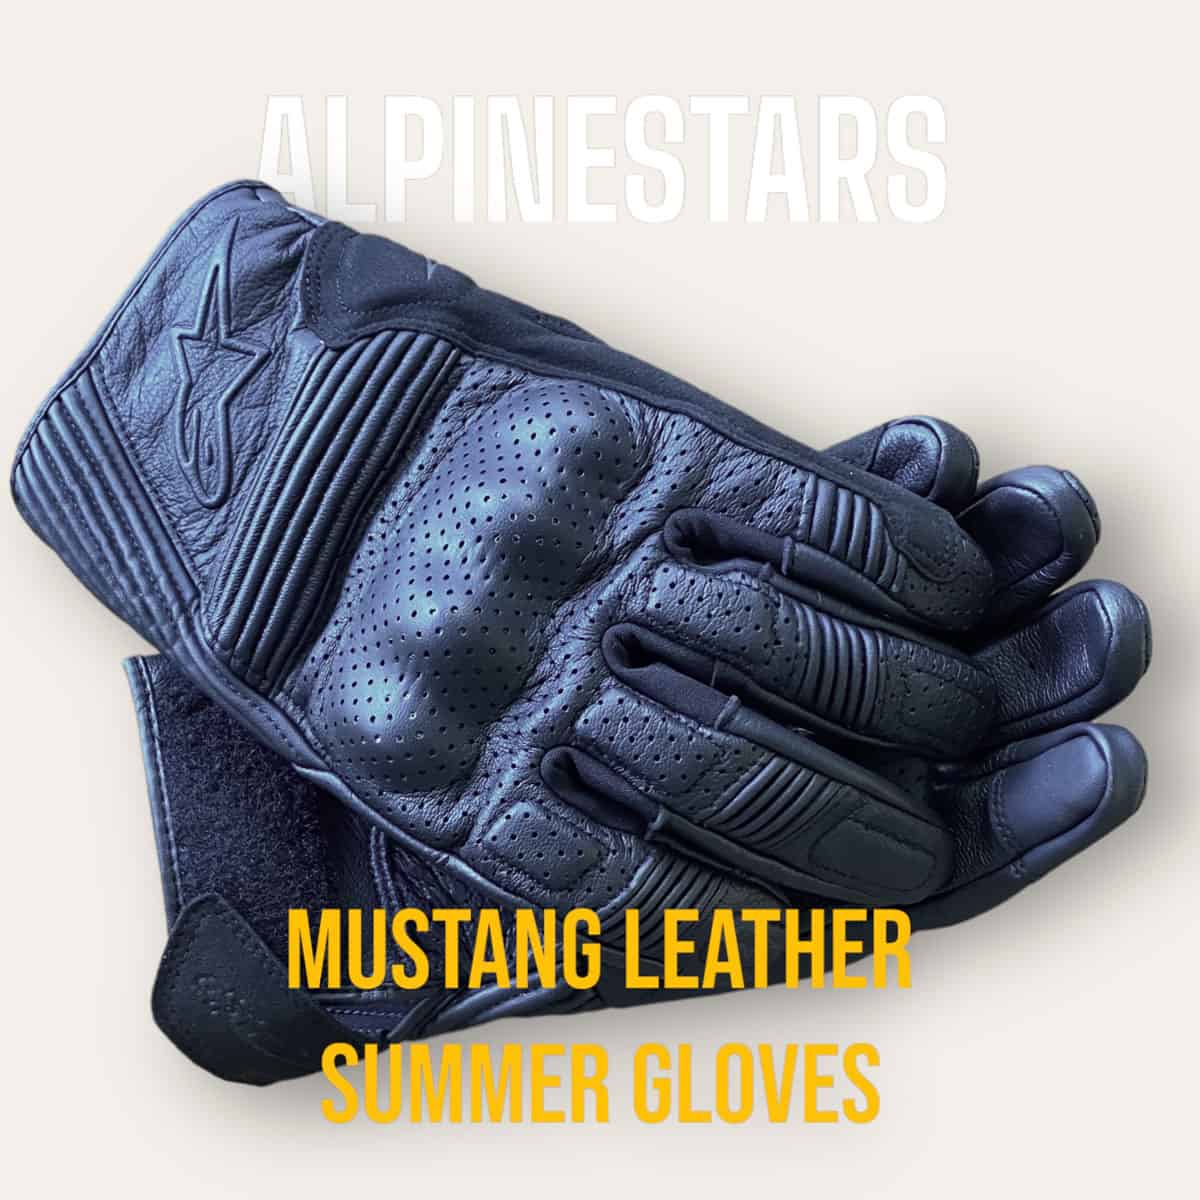 Alpinestars Mustang V2 Gloves: Summer motorcycle gloves - Amazingly comfortable